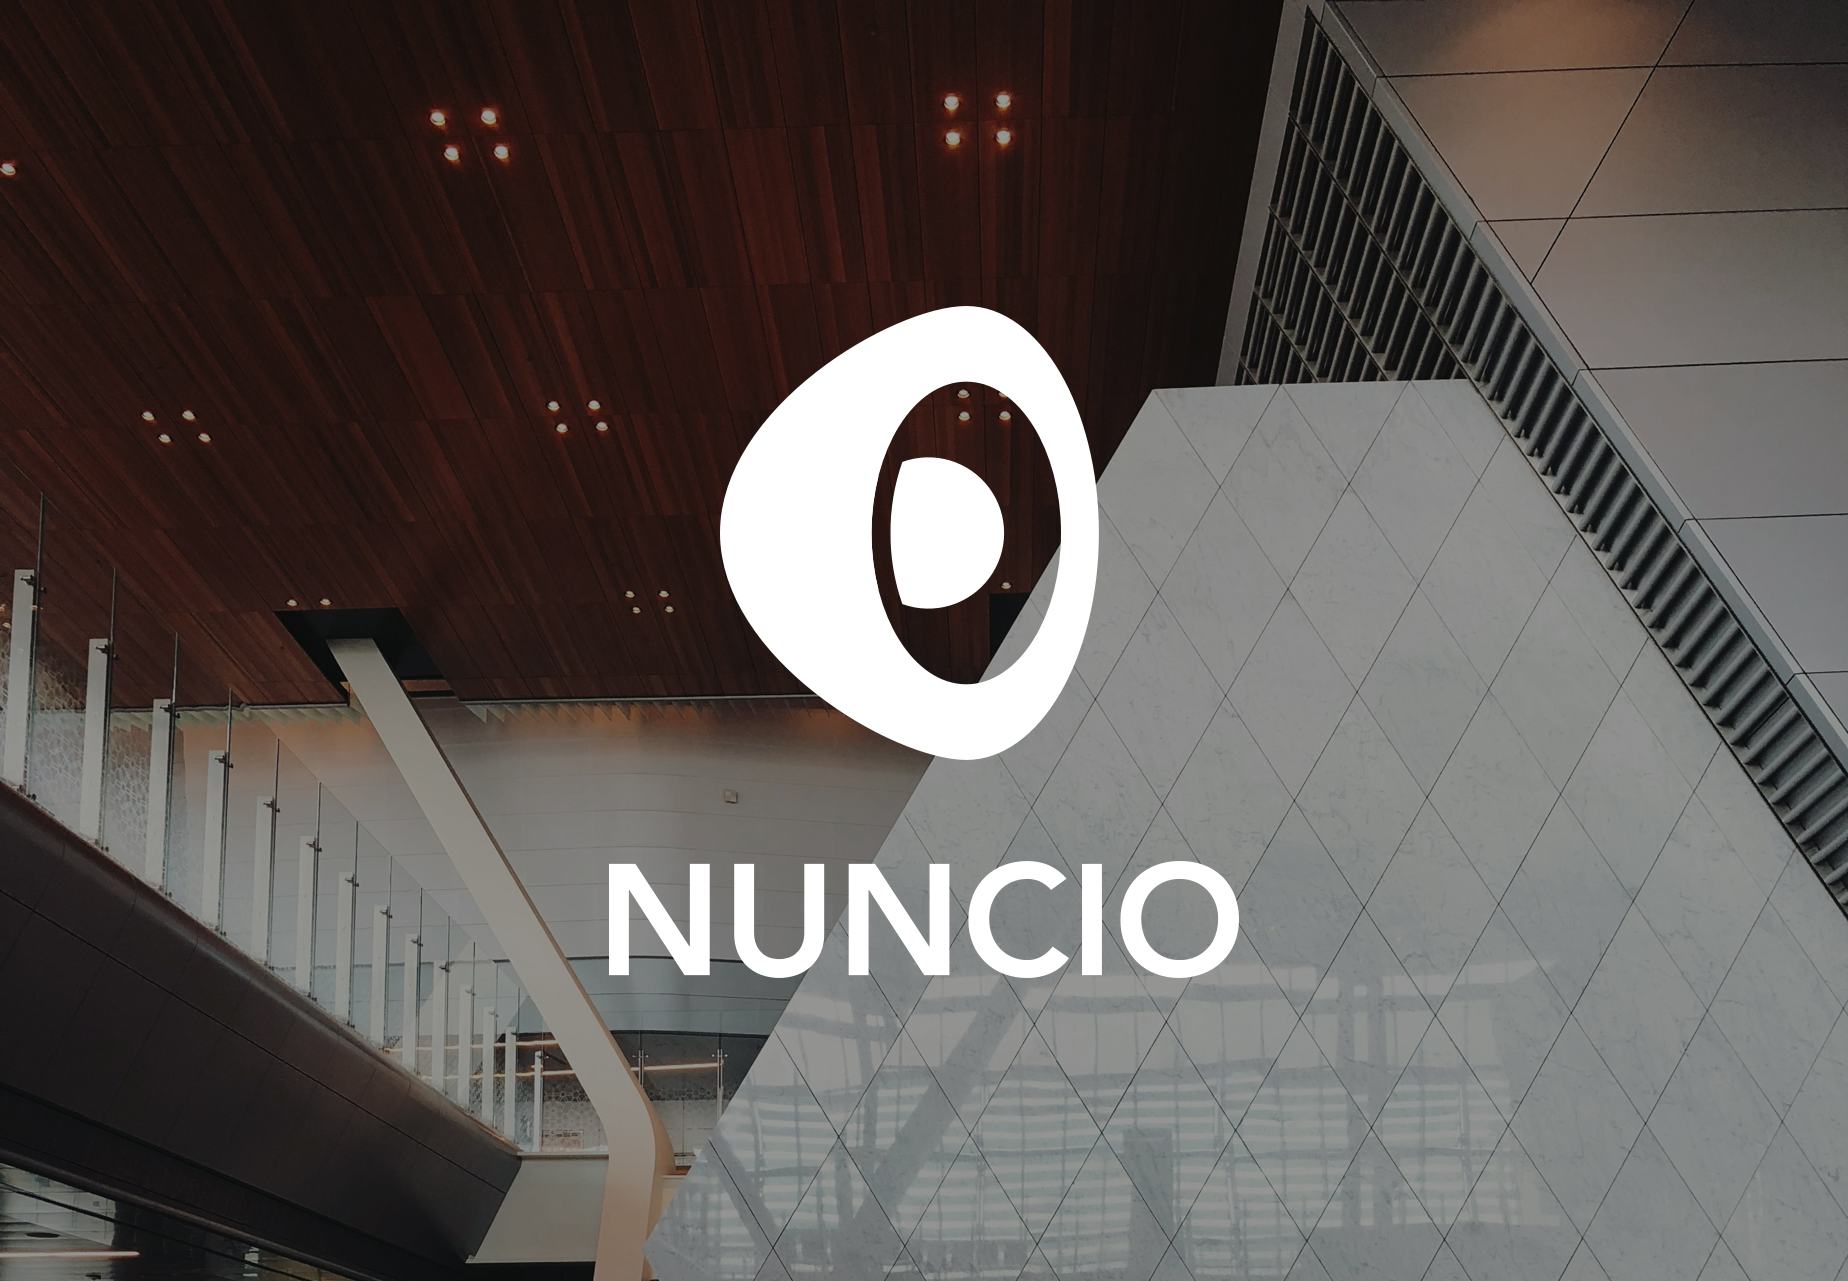 Nuncio app for repetitive announcements